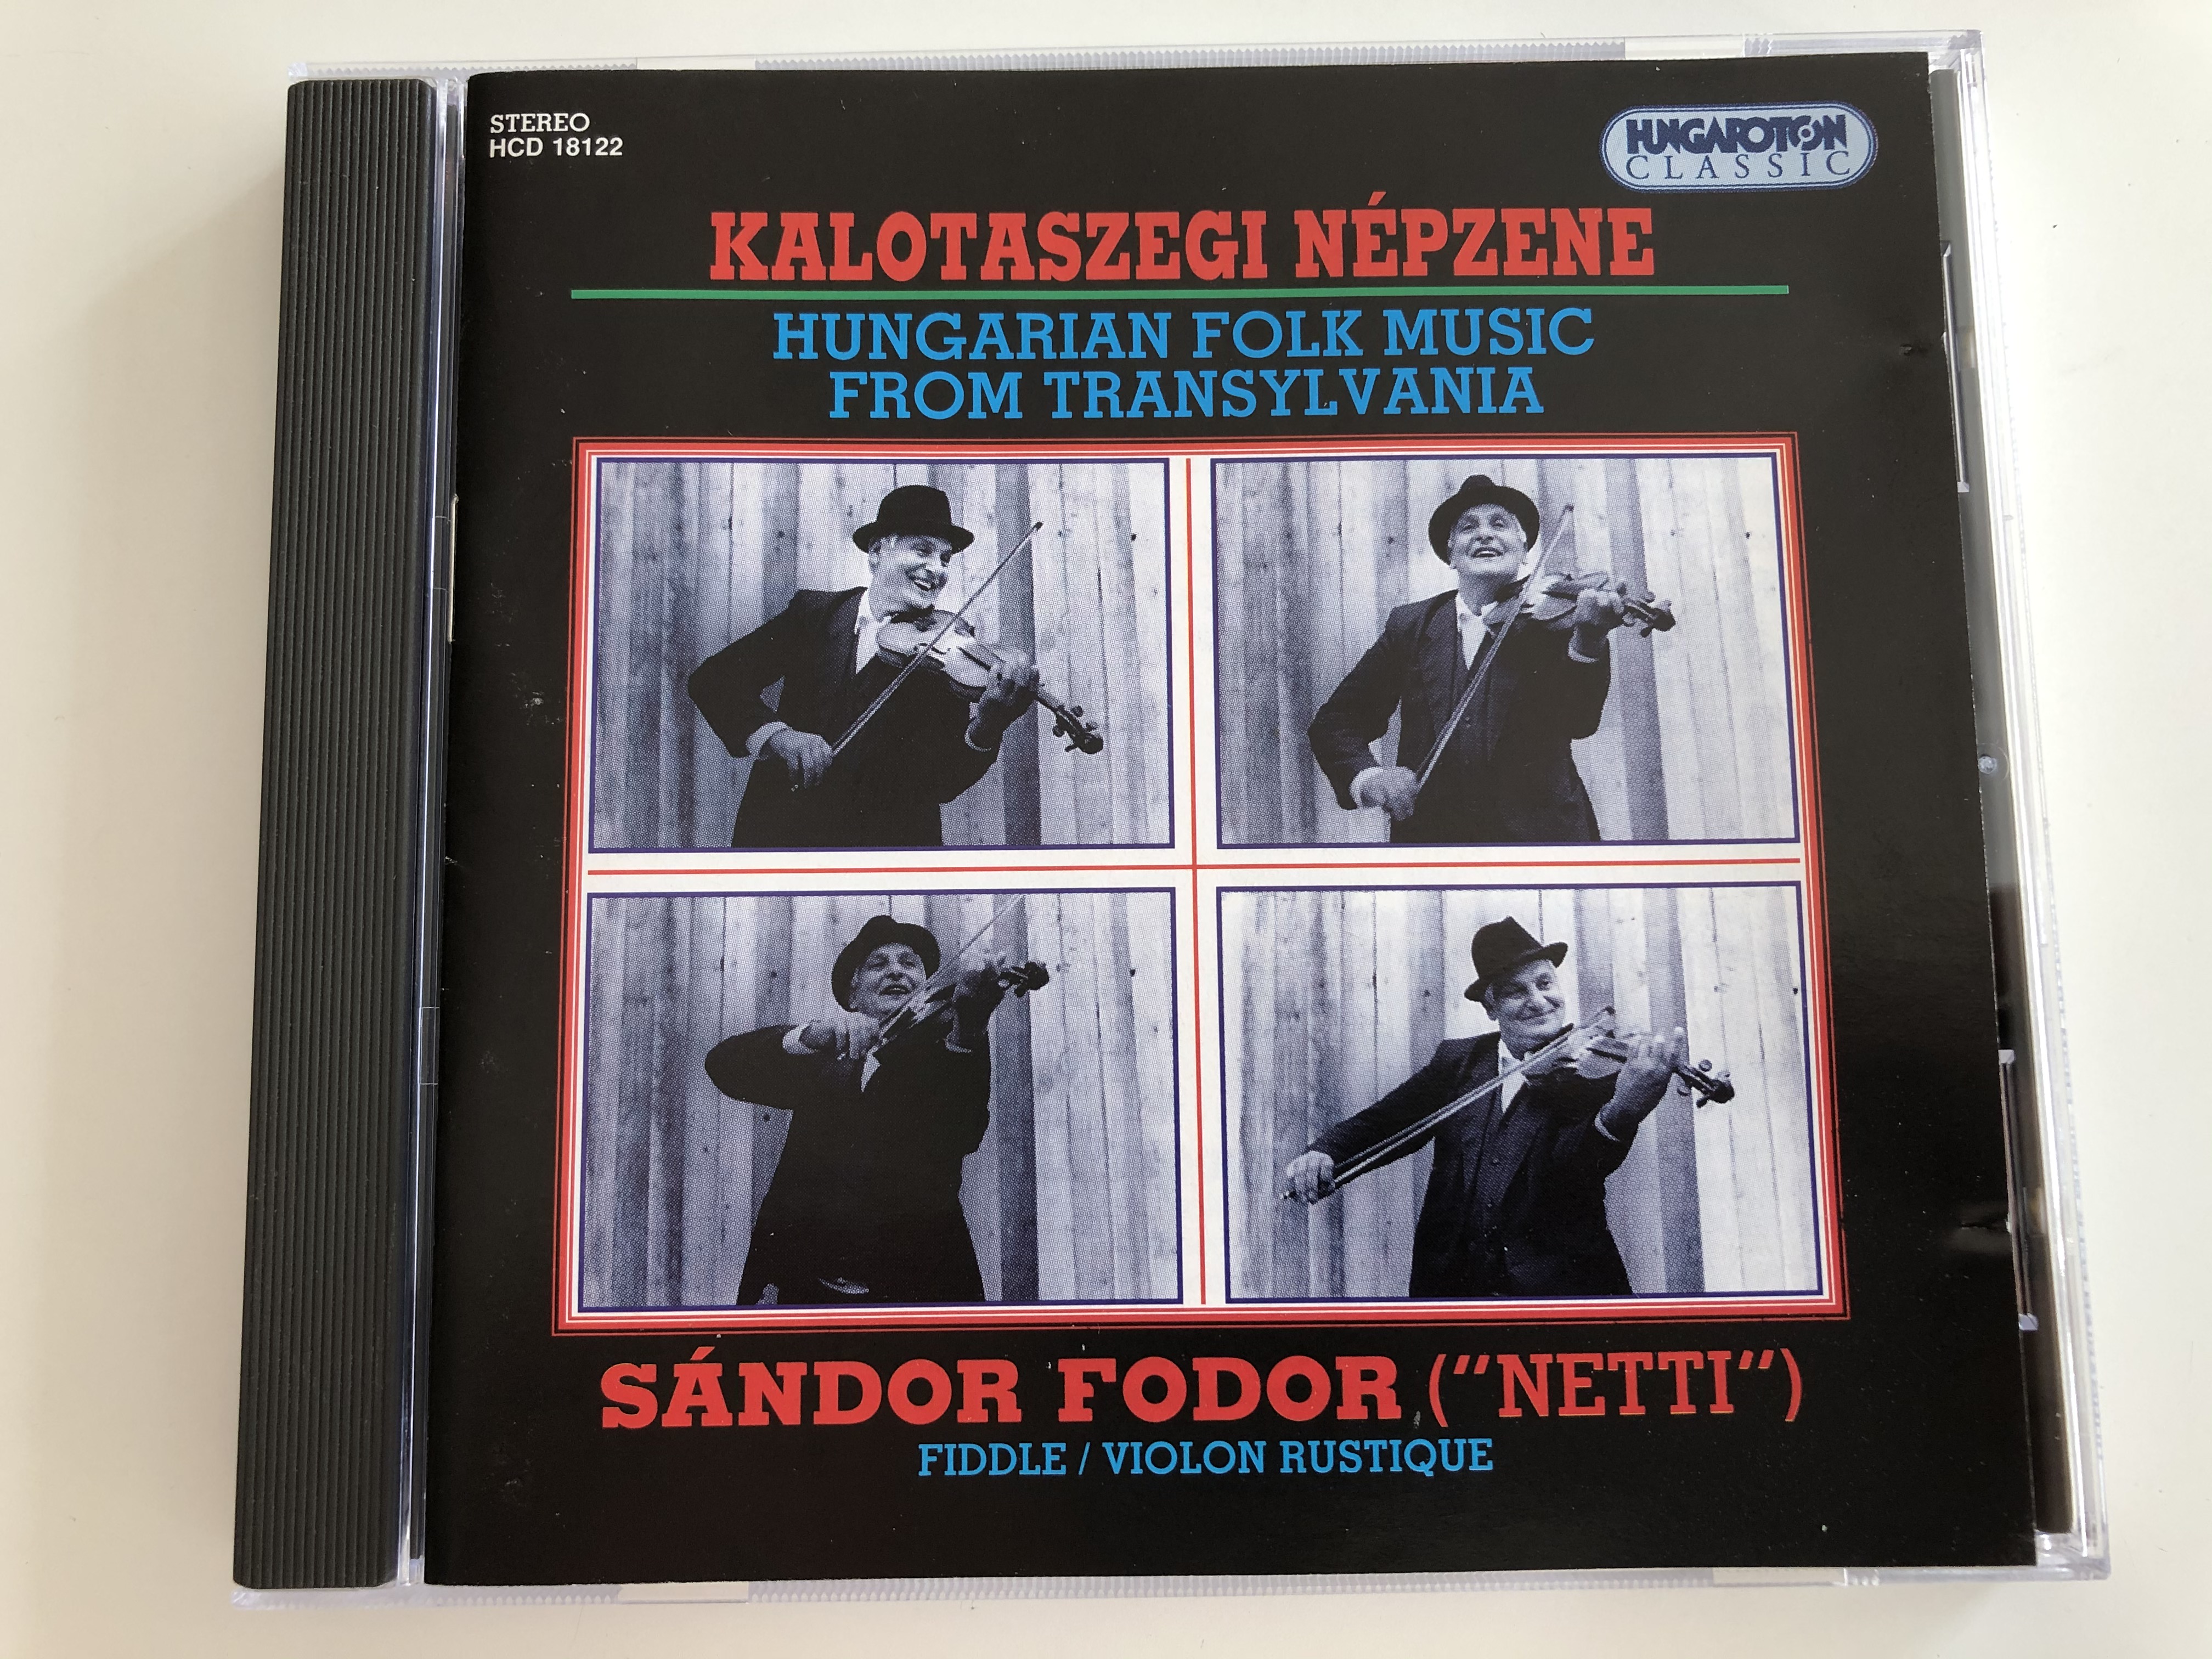 kalotaszegi-n-pzene-hungarian-folk-music-from-transylvania-s-ndor-fodor-netti-fiddleviolin-ristique-hungaroton-classic-audio-cd-1994-stereo-hcd-18122-1-.jpg